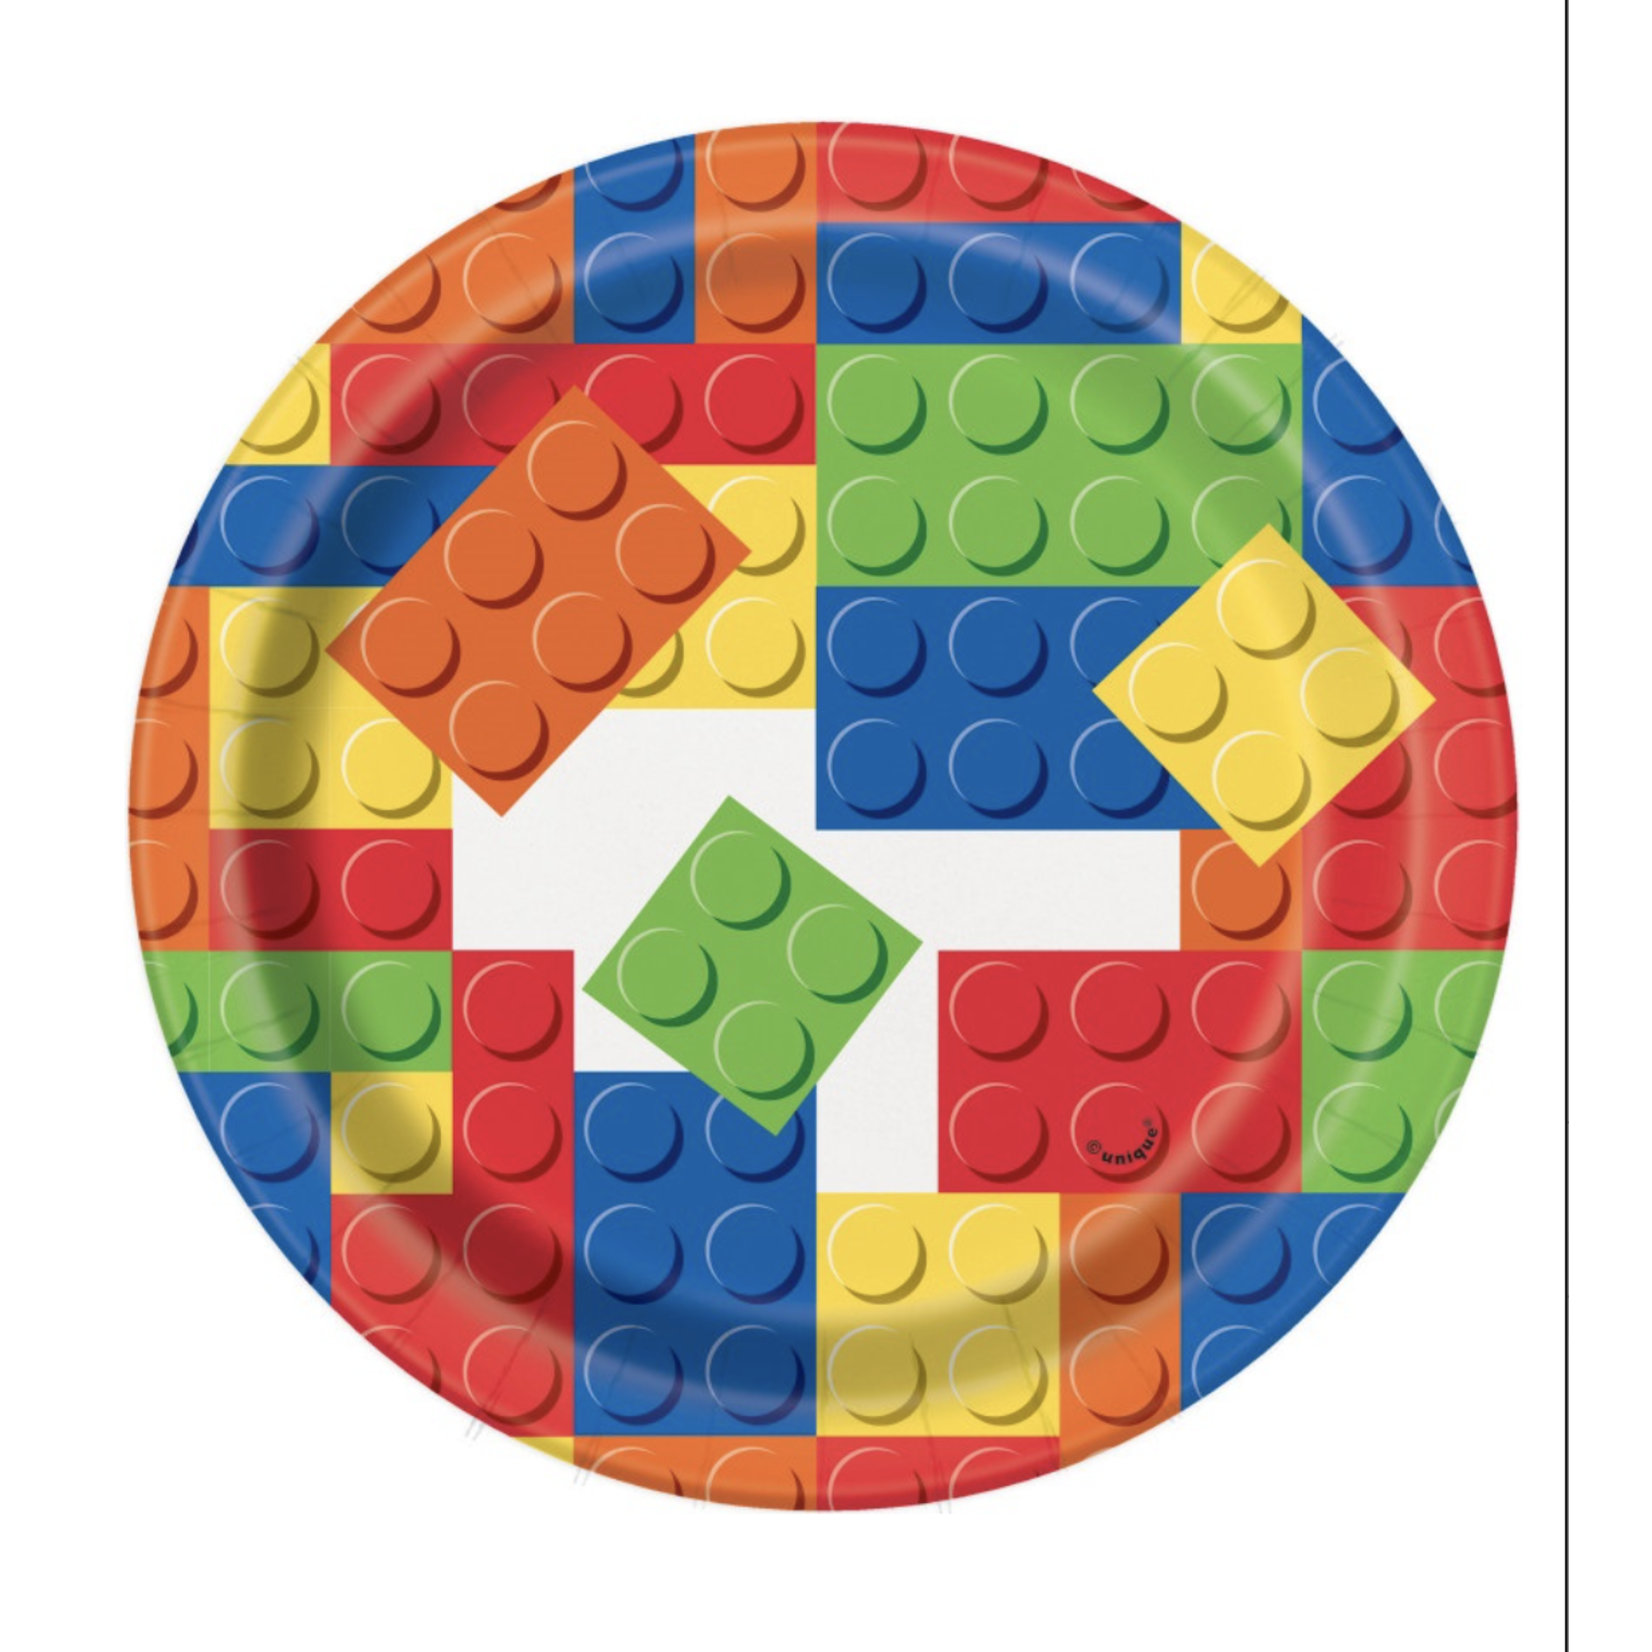 Lego Plate "7